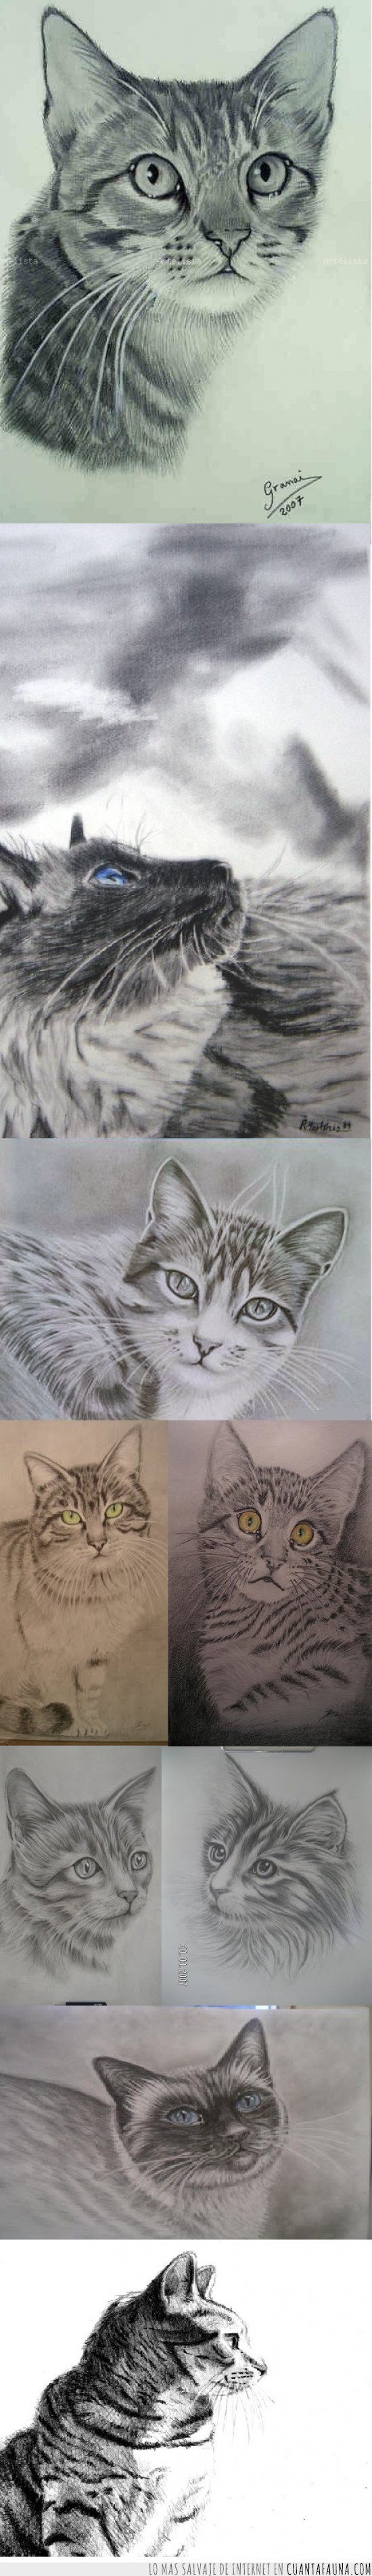 dibujos,gato,arte,pintura,carboncillo